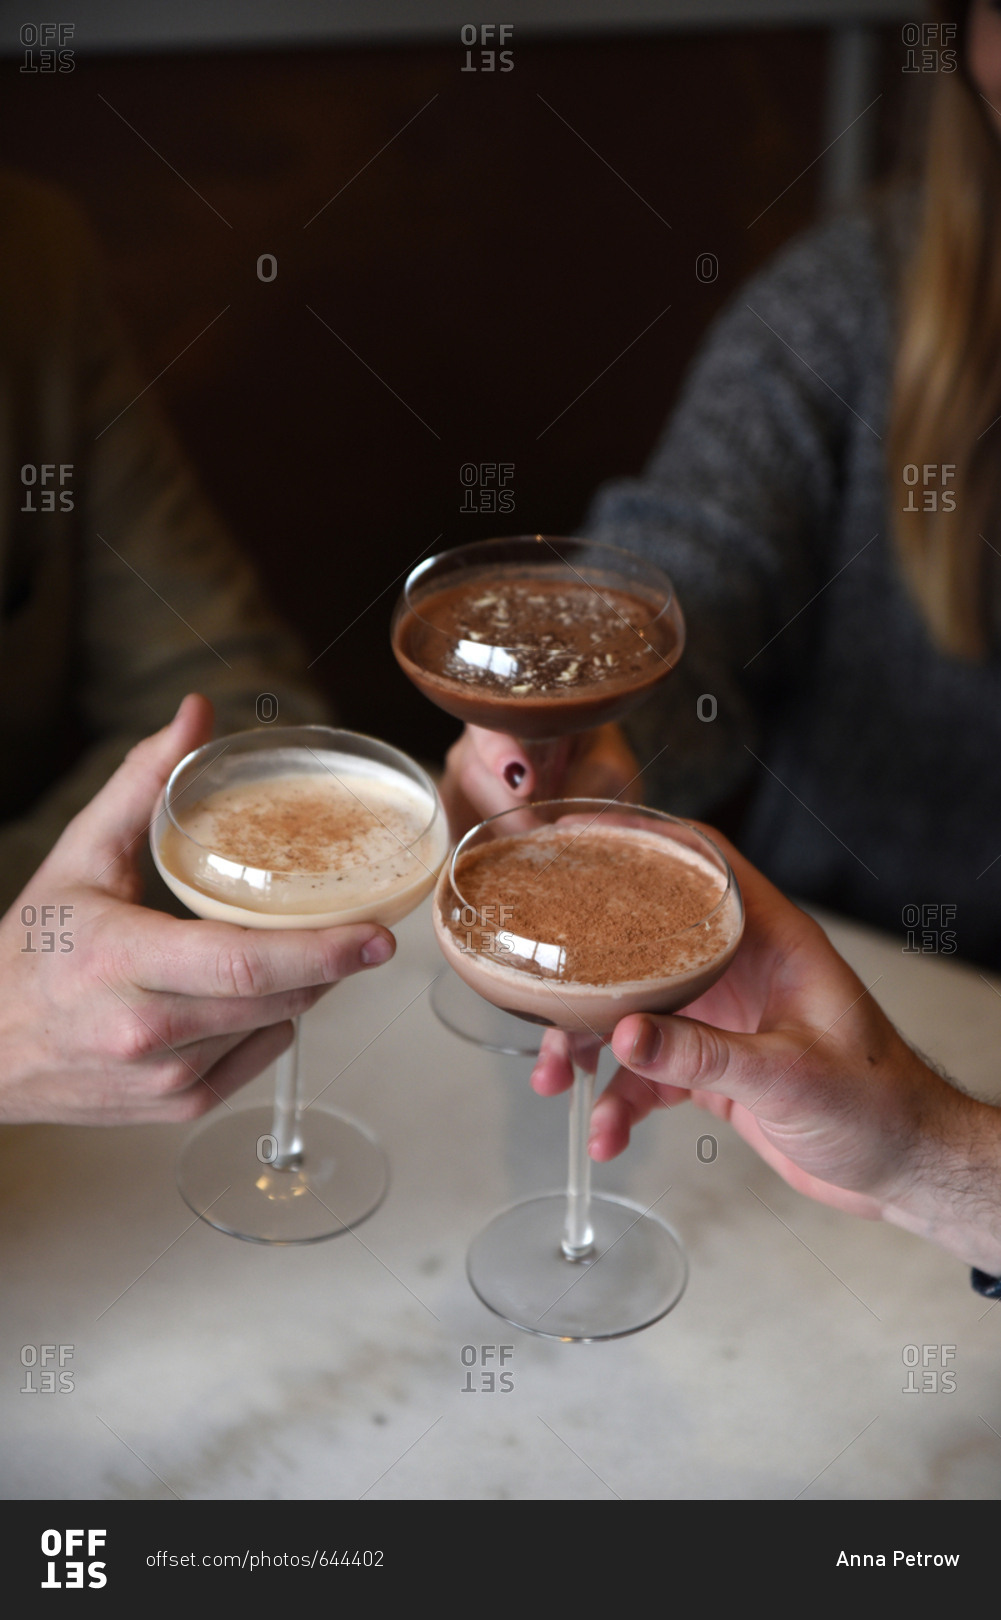 Three people holding dessert drinks